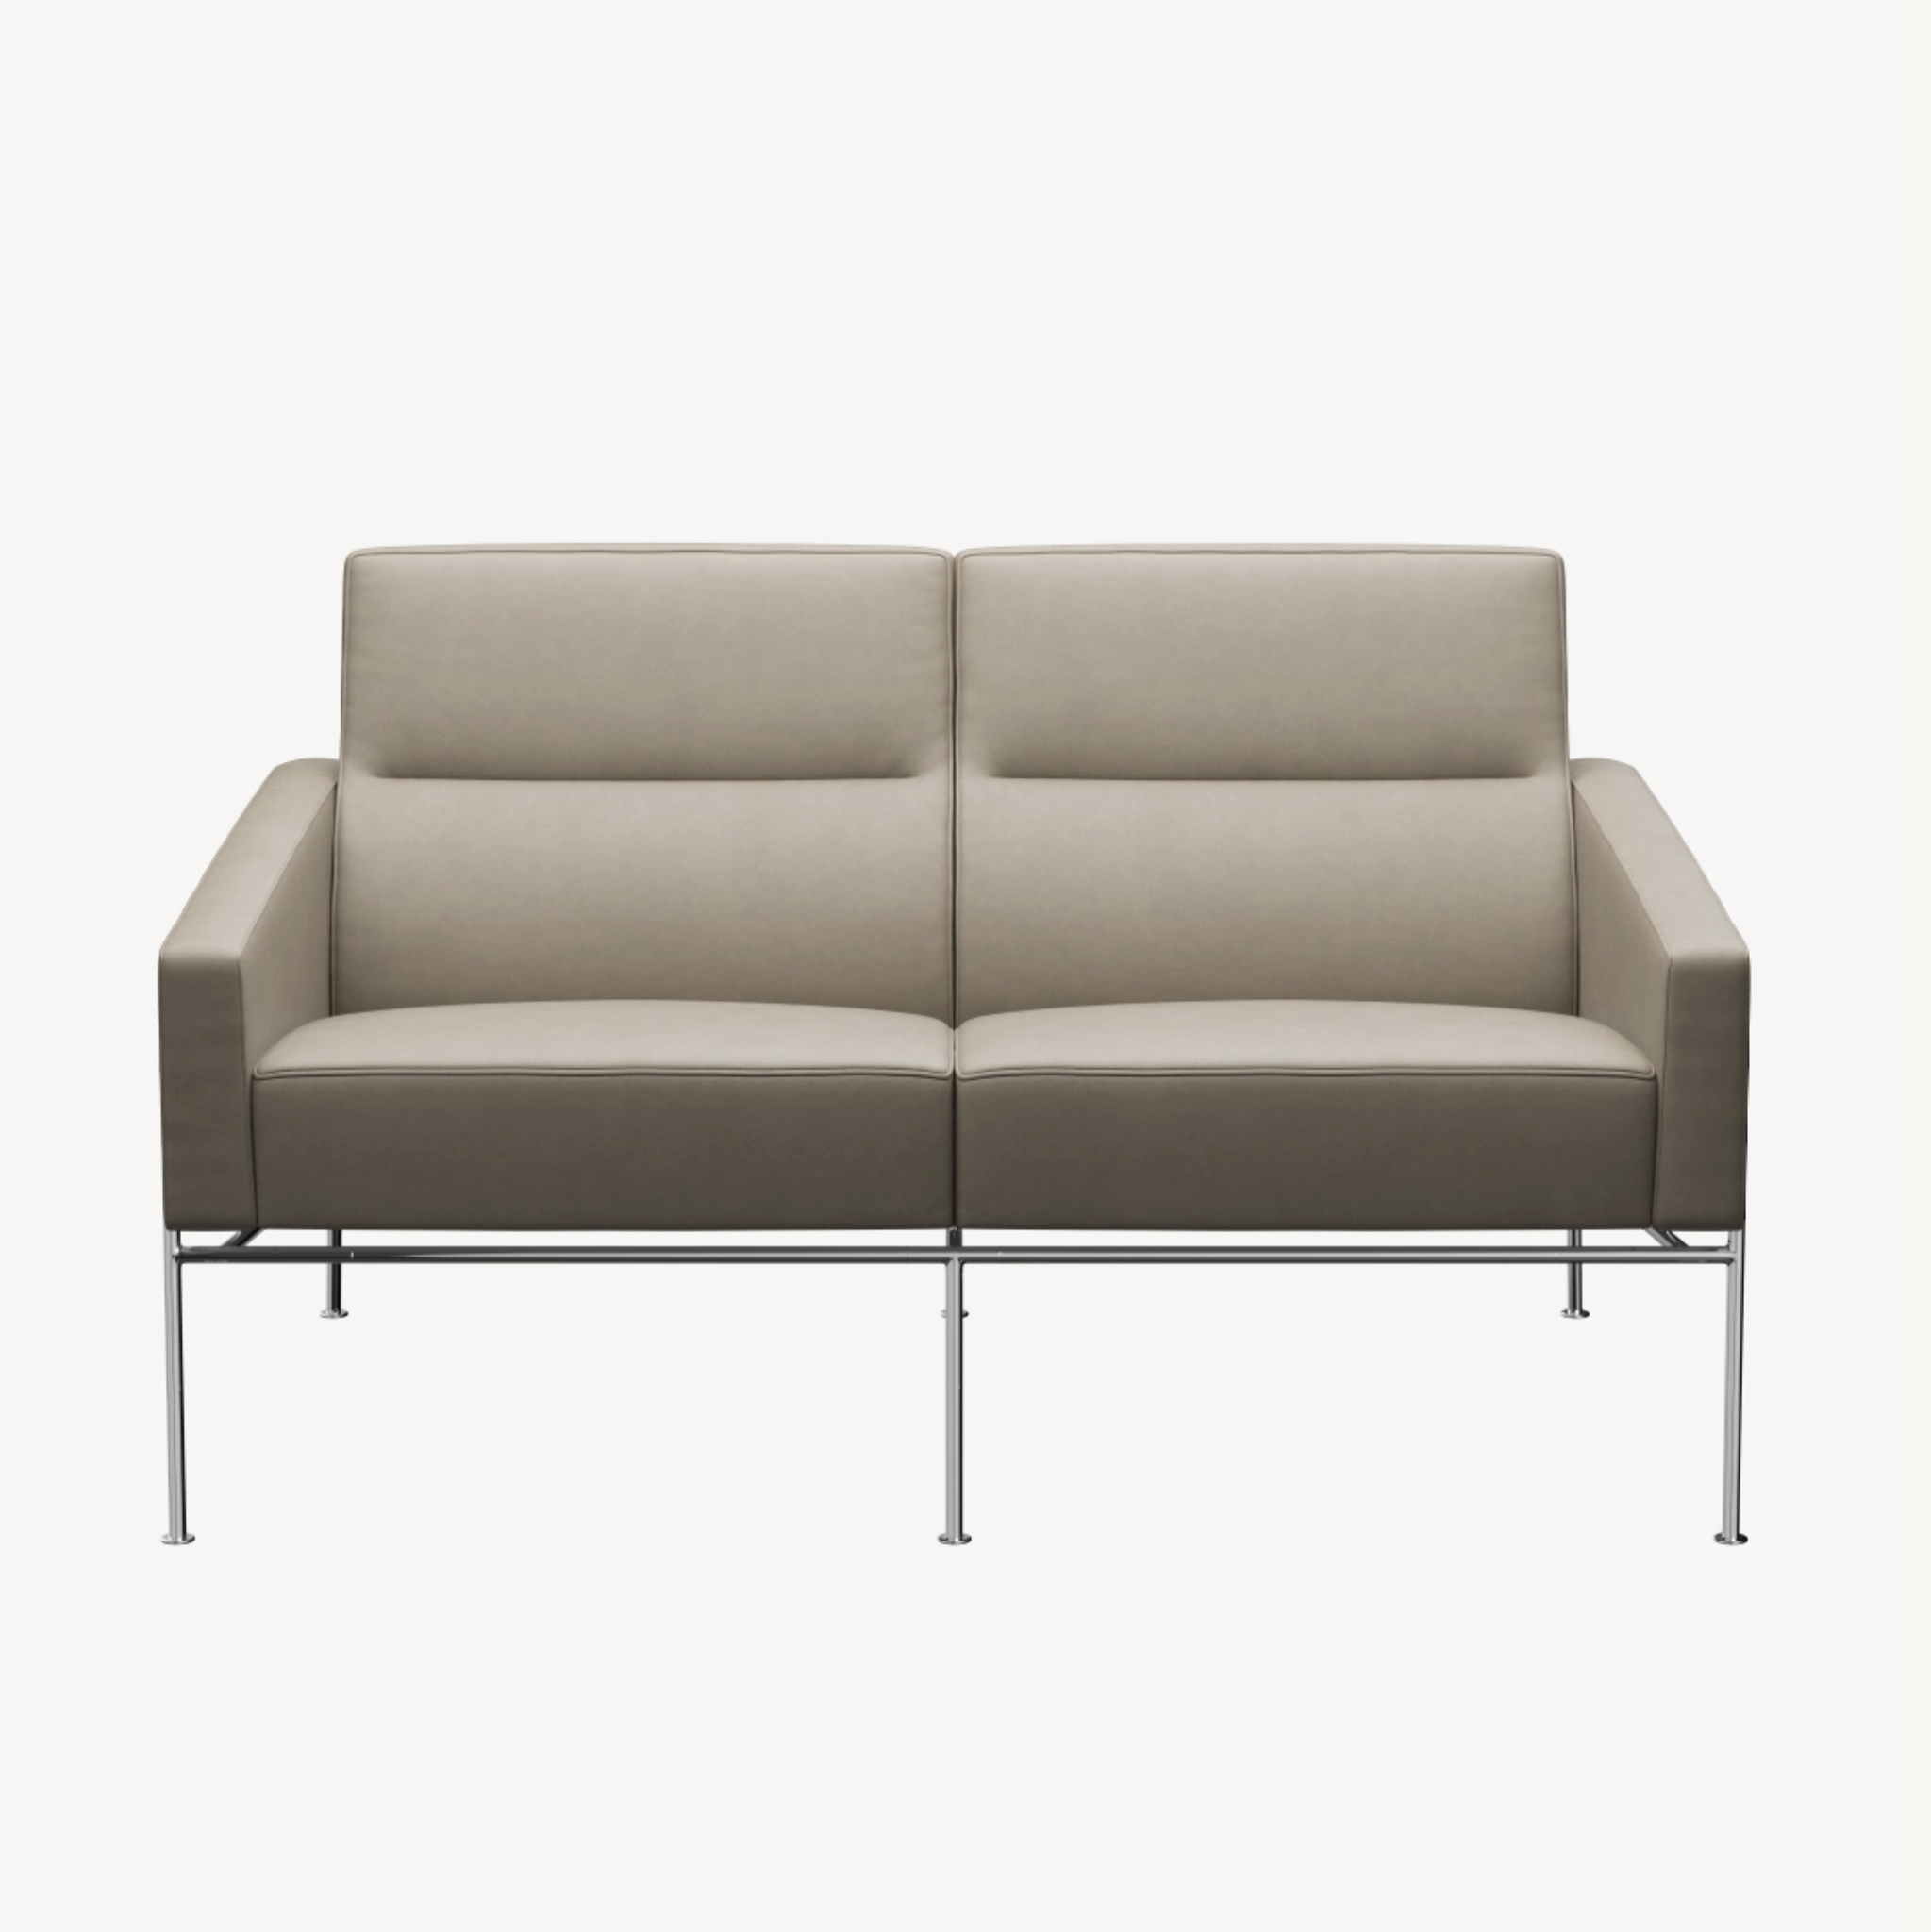 Series 3300 Sofa